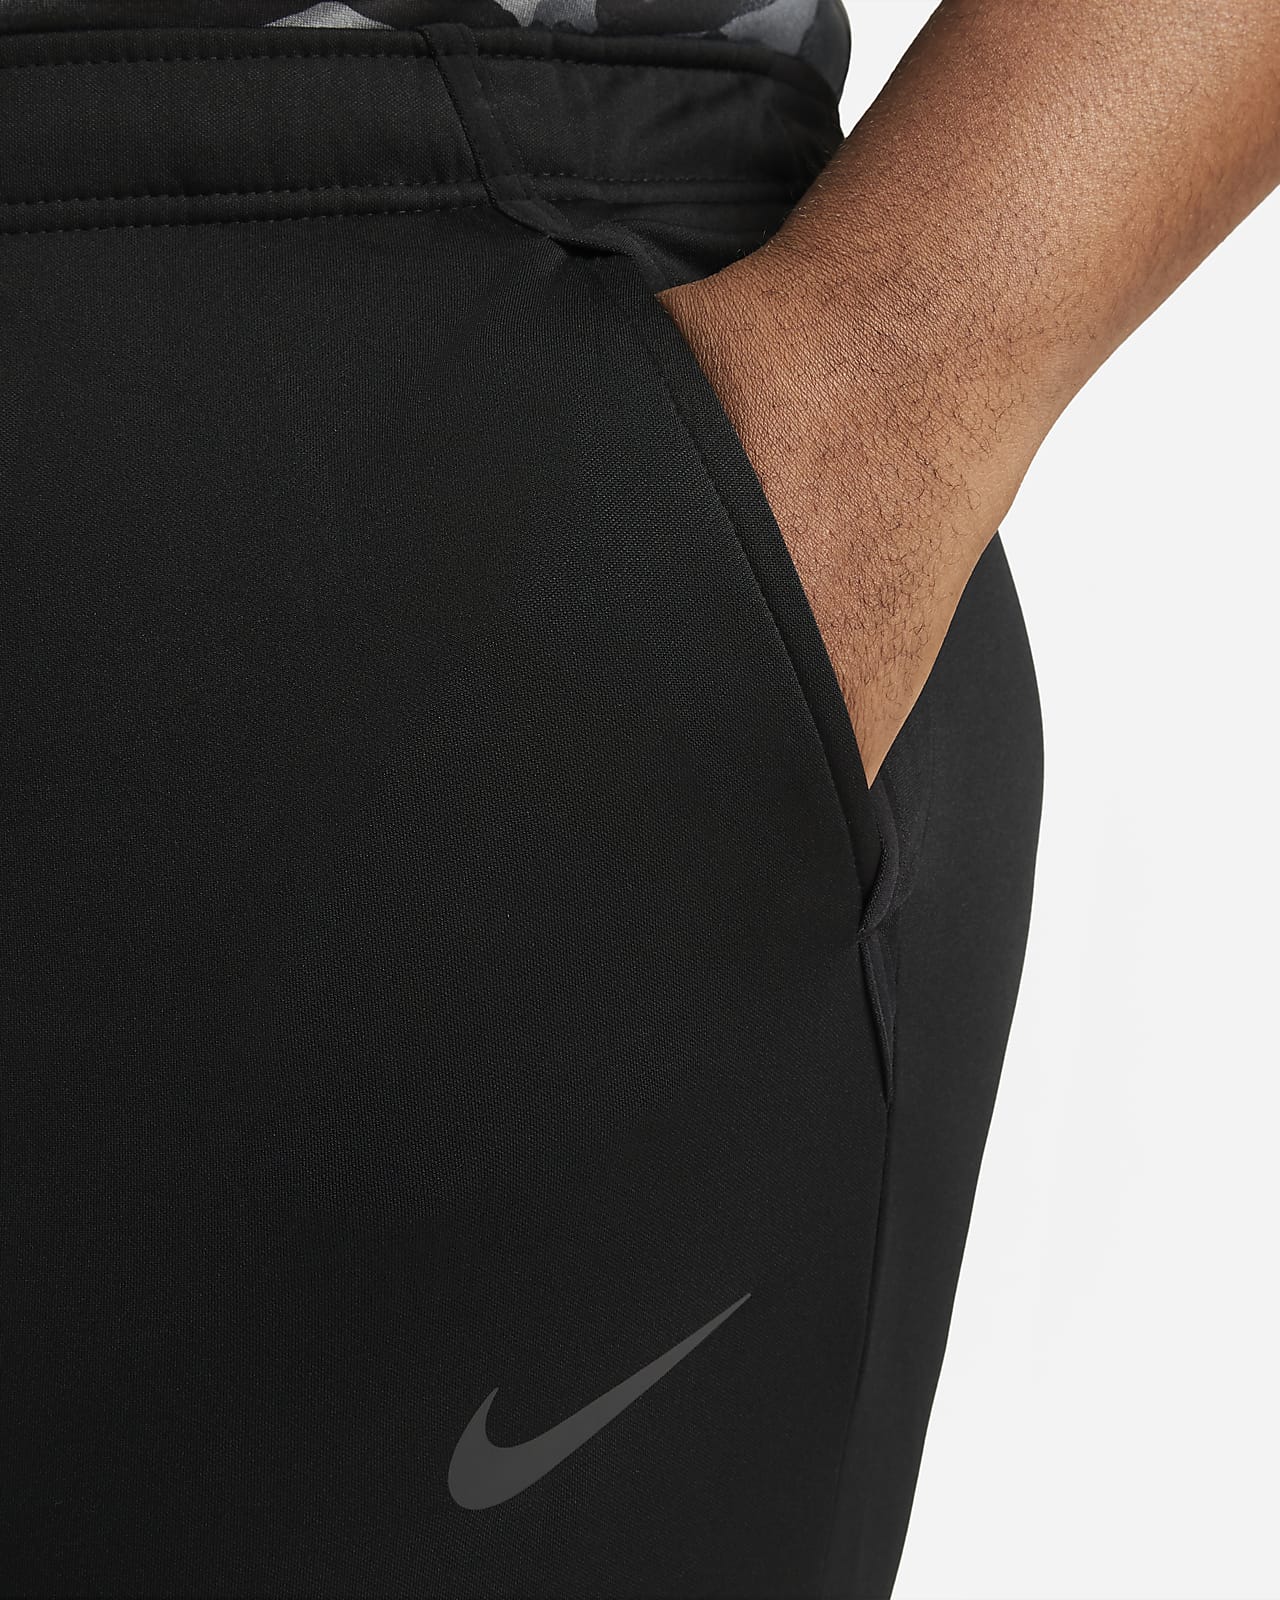 Mua Nike Men's Dry Fleece Training Pants trên Amazon Mỹ chính hãng 2023 |  Giaonhan247